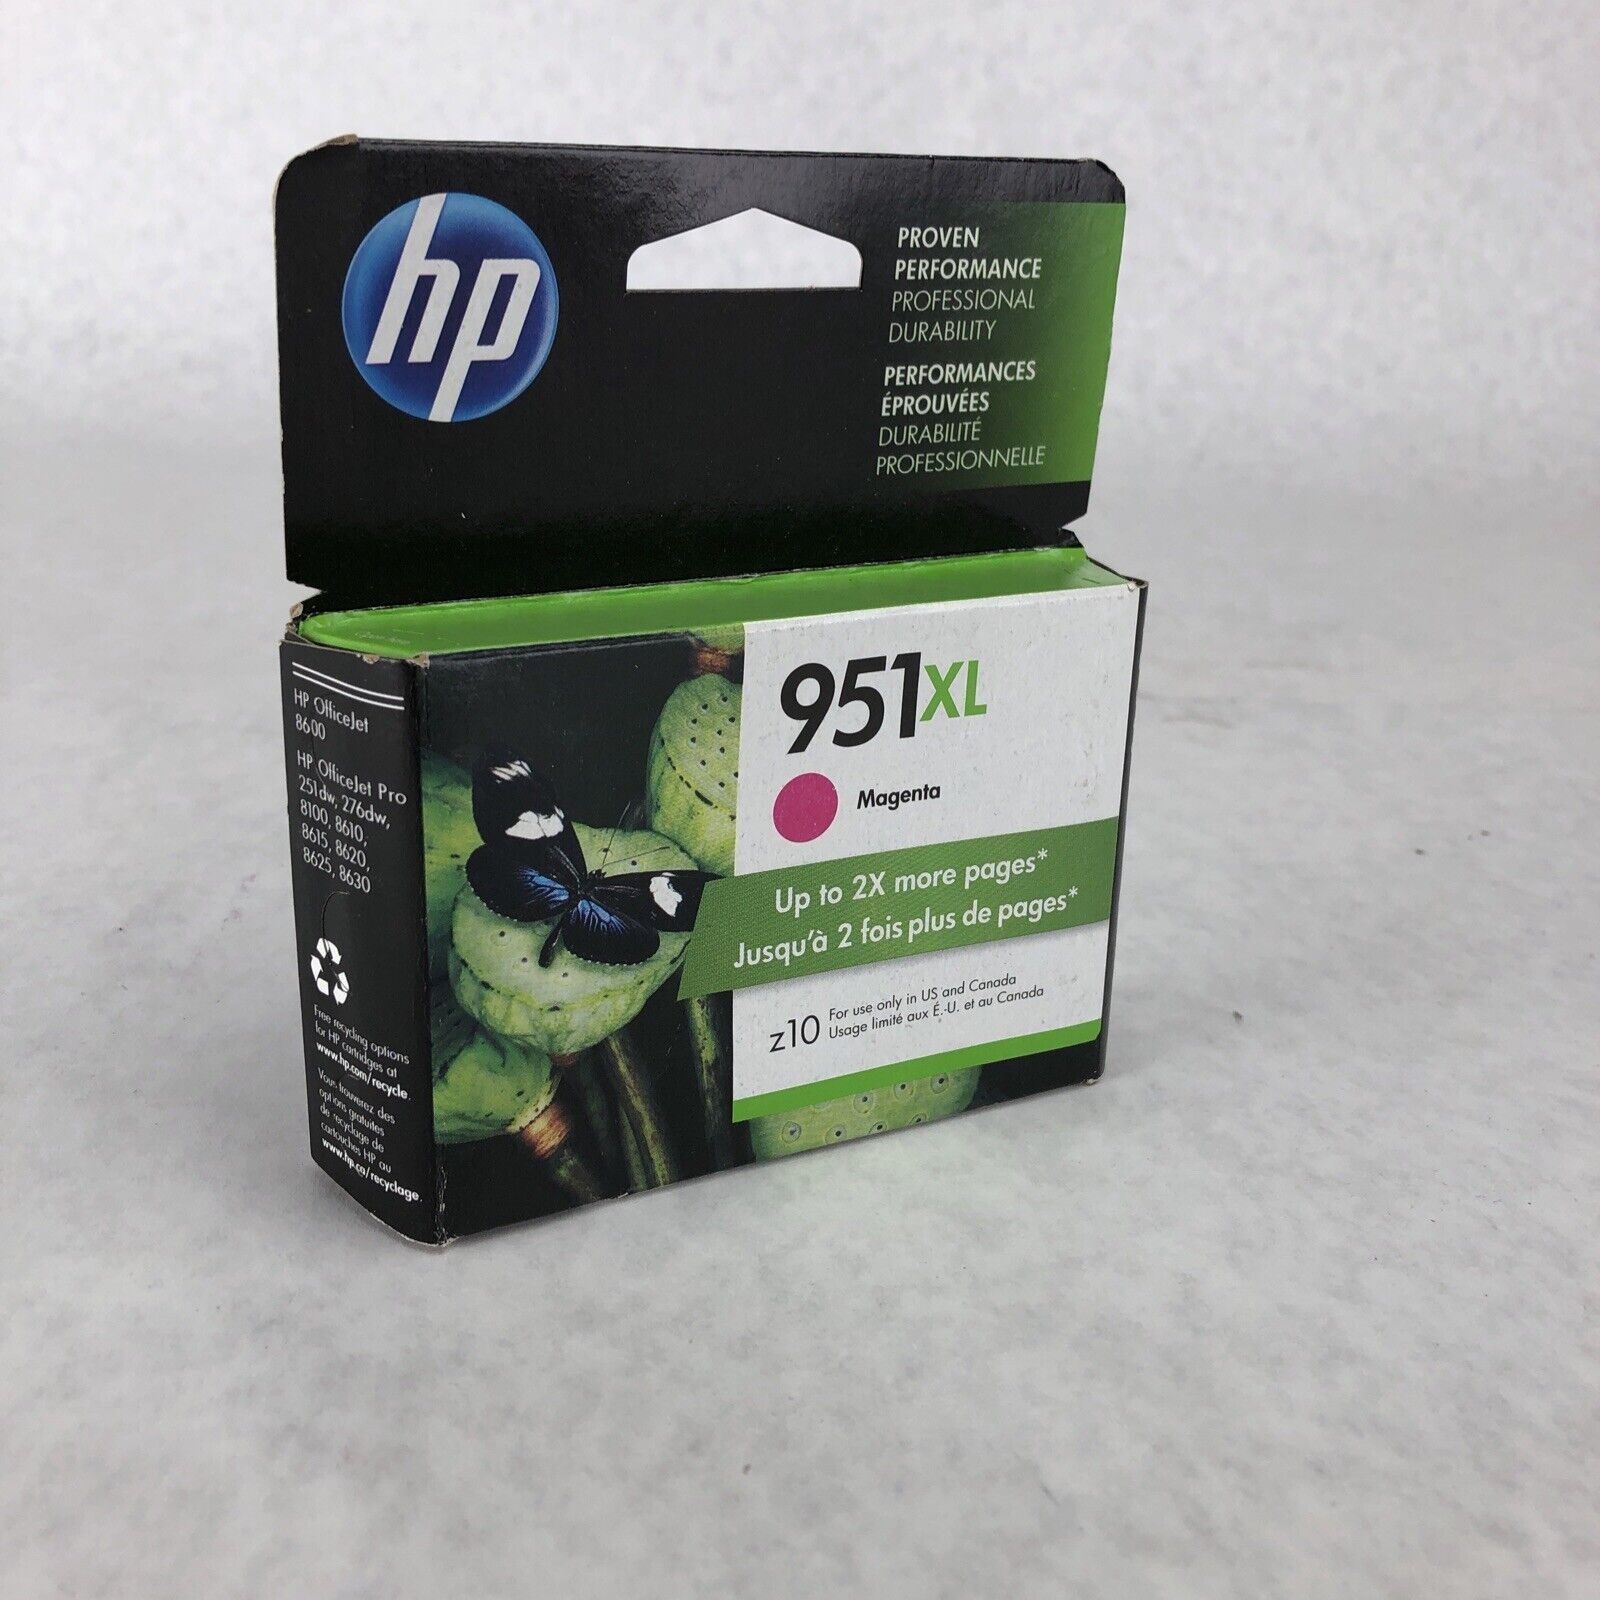 HP 951XL Magenta Ink Cartridge in Retail Box (Exp: May 2020)